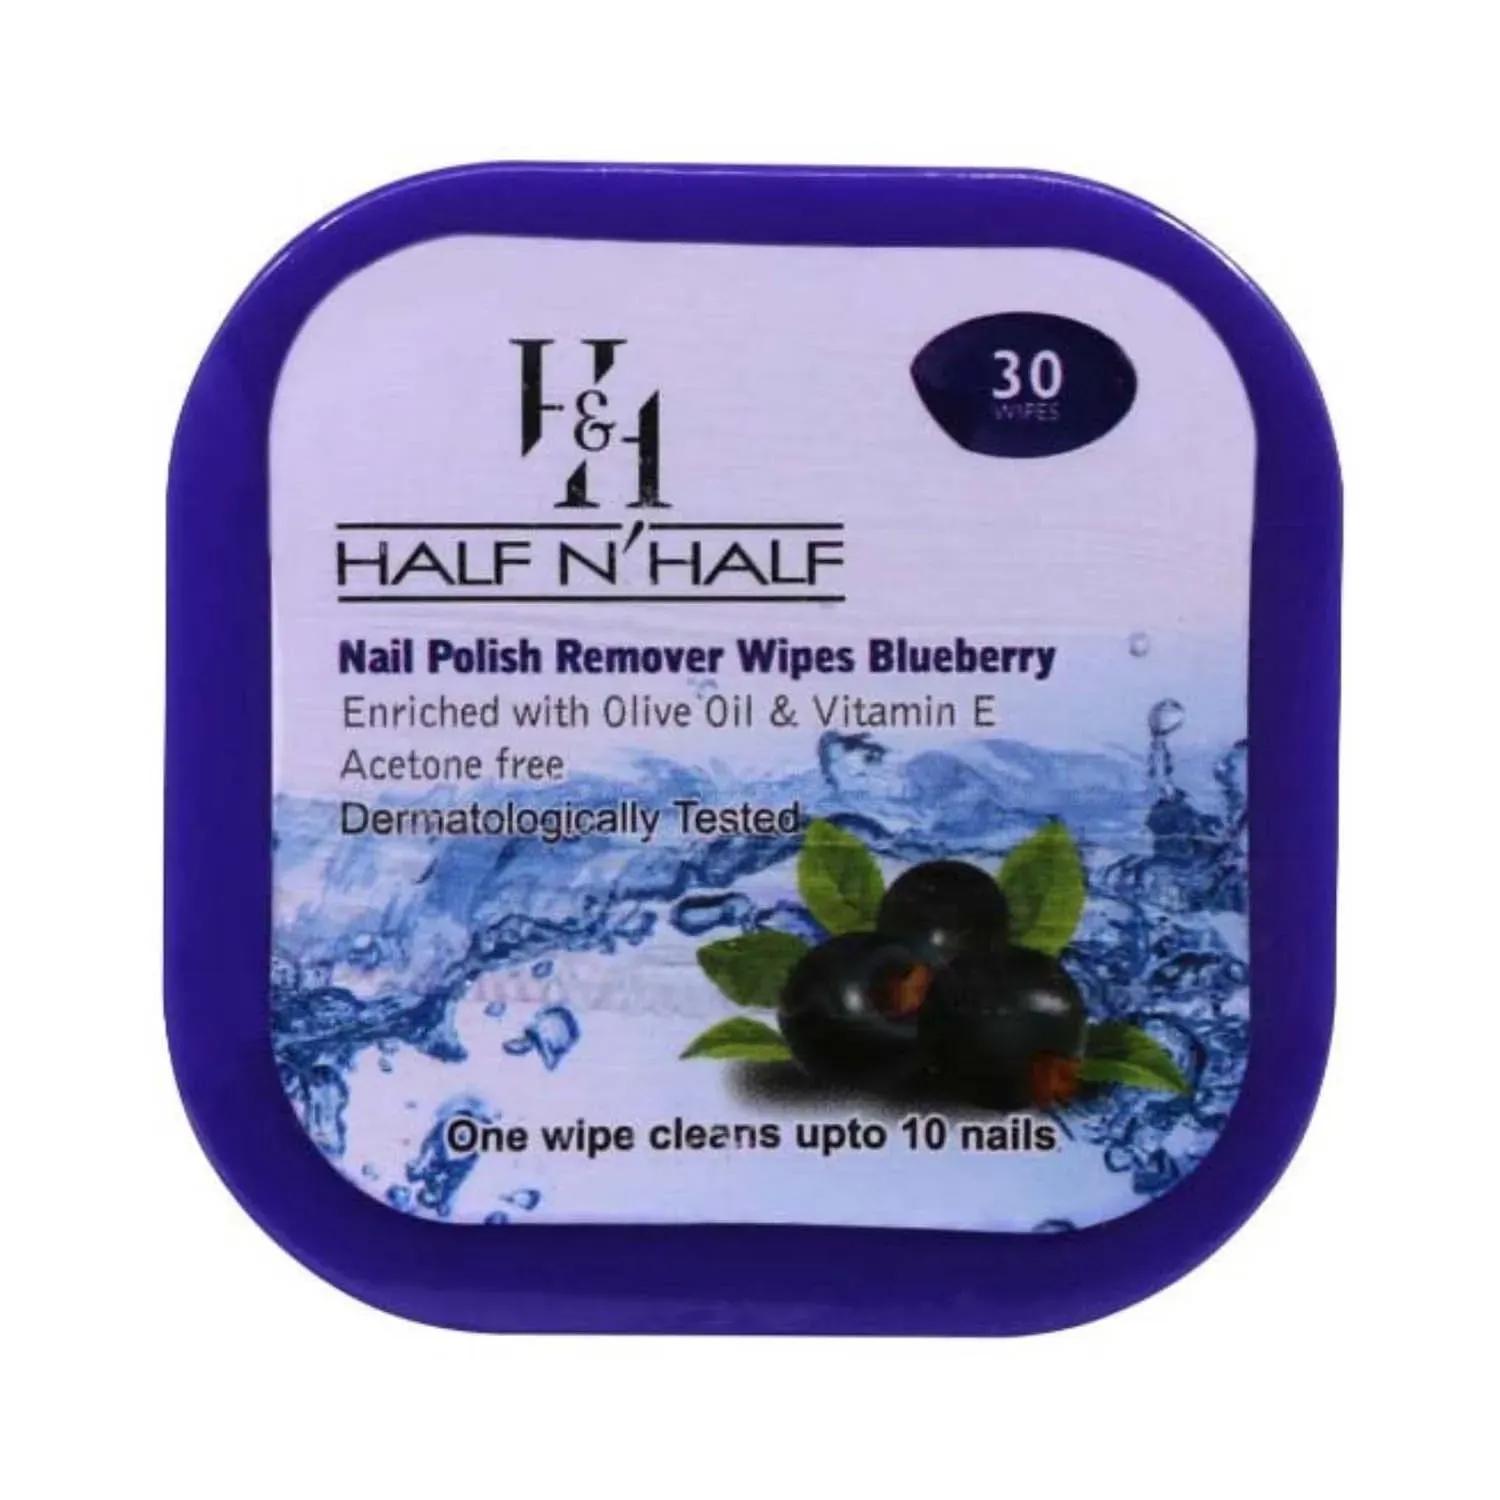 half n half blueberry nail polish remover wipes - (30 pcs)